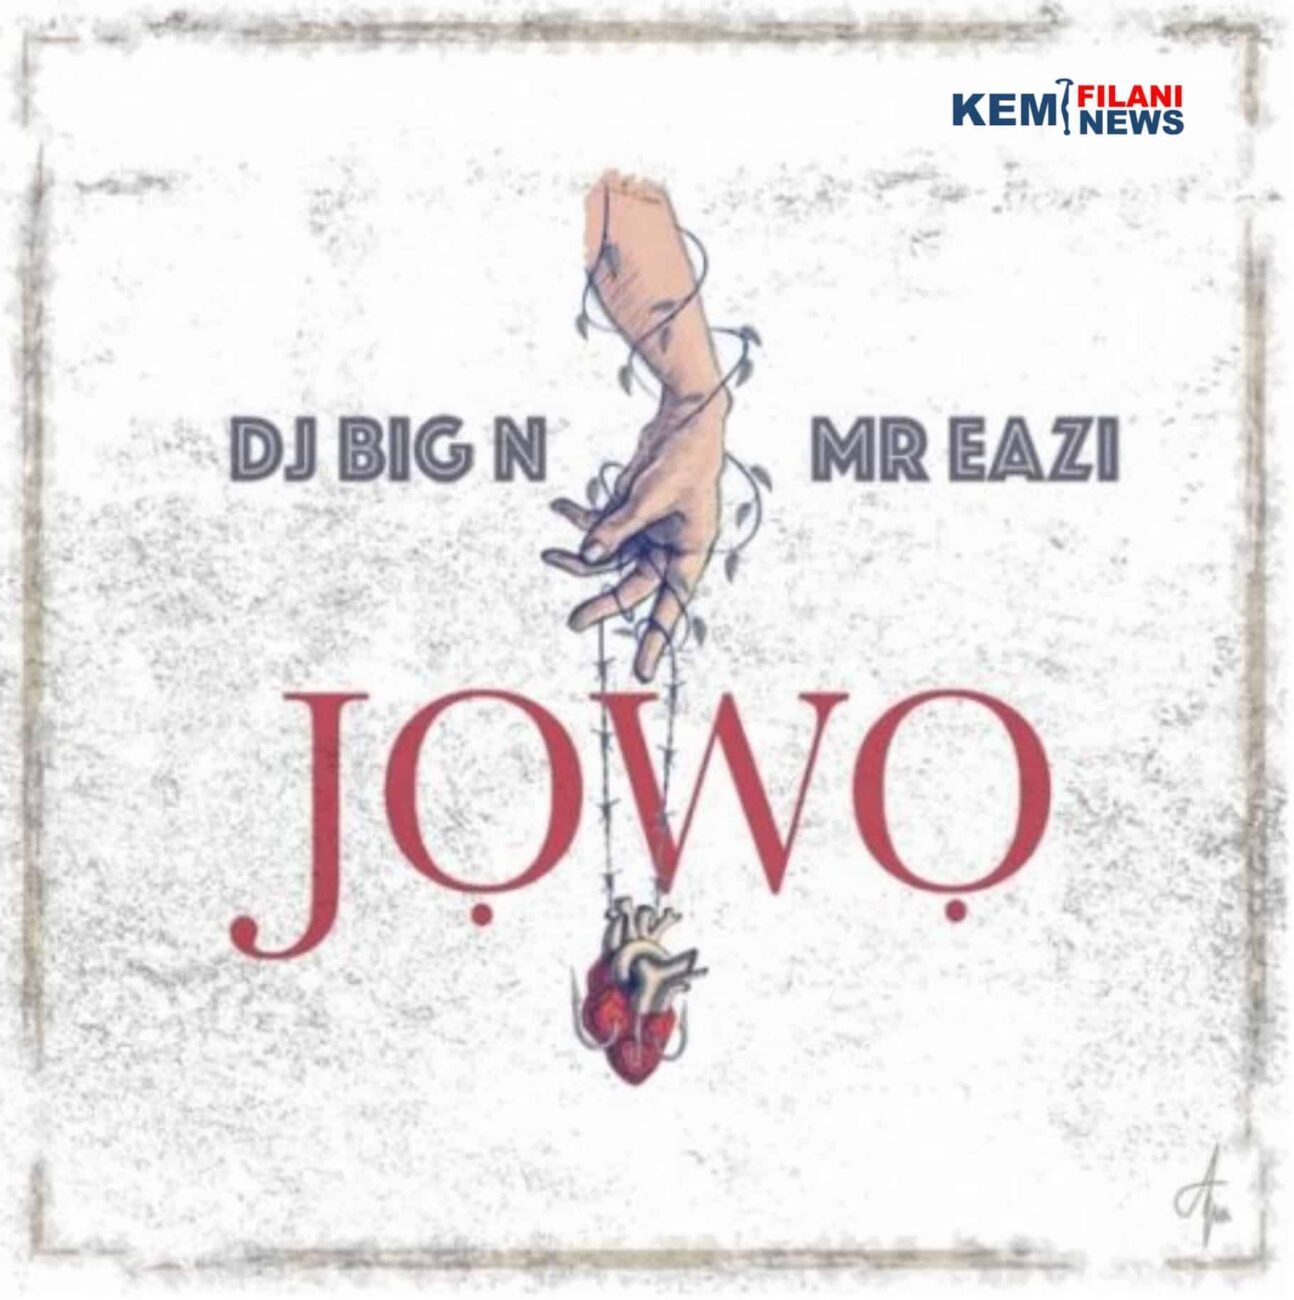 download mp3 DJ Big N ft. Mr Eazi - Jowo mp3 download